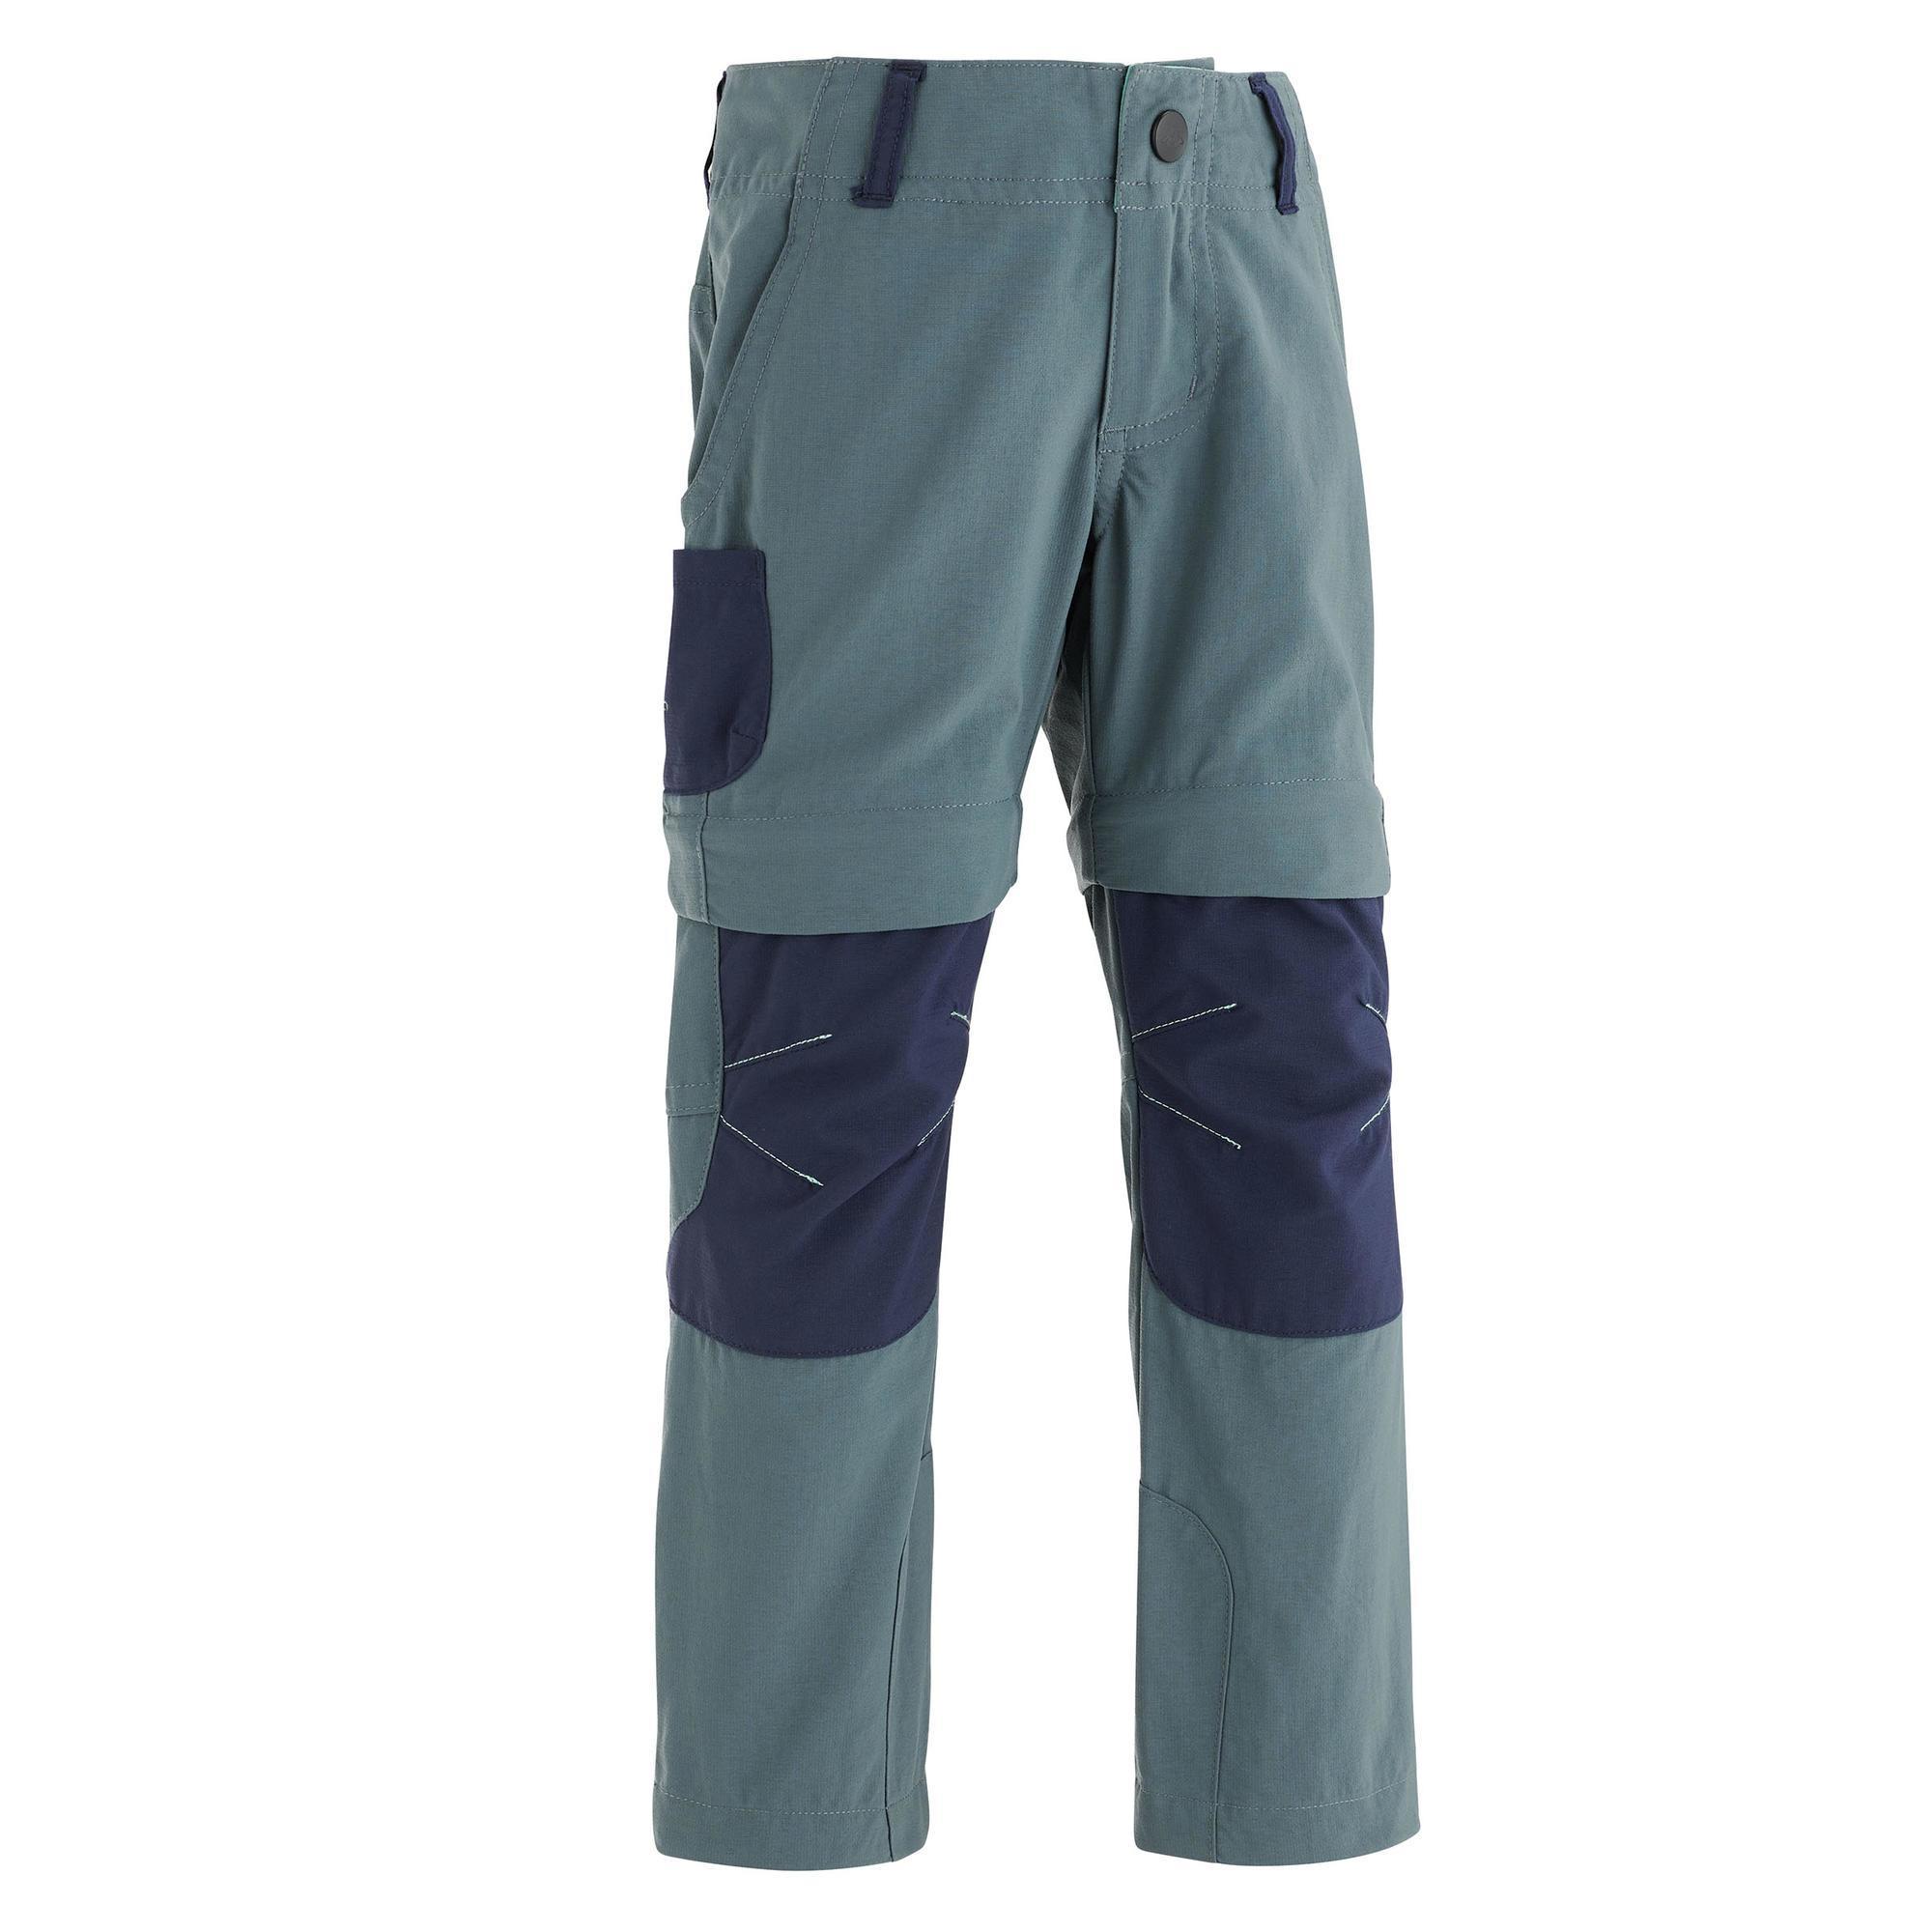 Pantalon Modulabil Drumeție la munte MH500 Gri-Albastru Fete 2-6 ani decathlon.ro  Imbracaminte trekking si drumetie